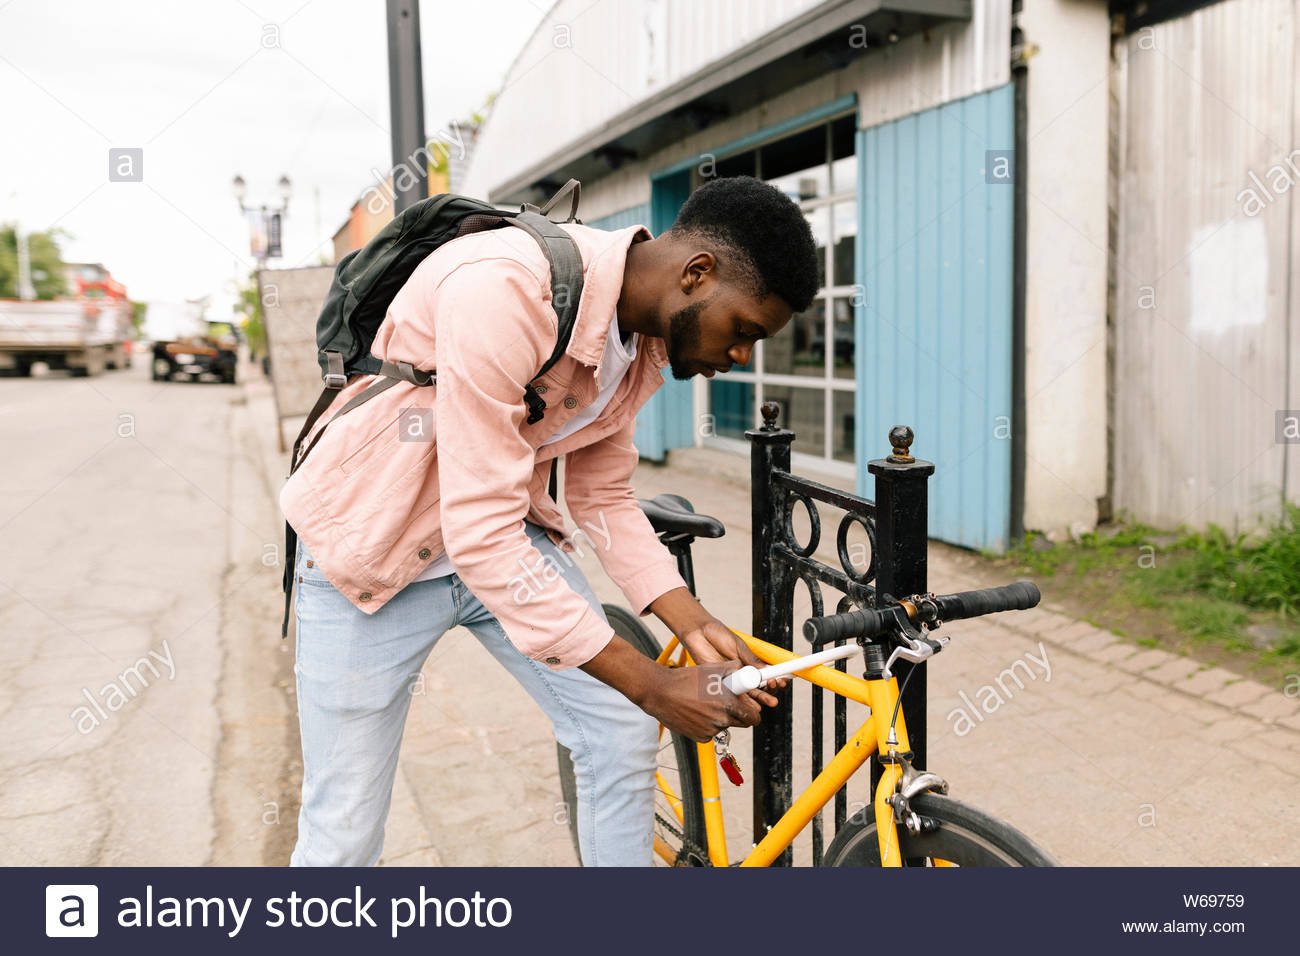 Young man locking bicycle on sidewalk Stock Photo